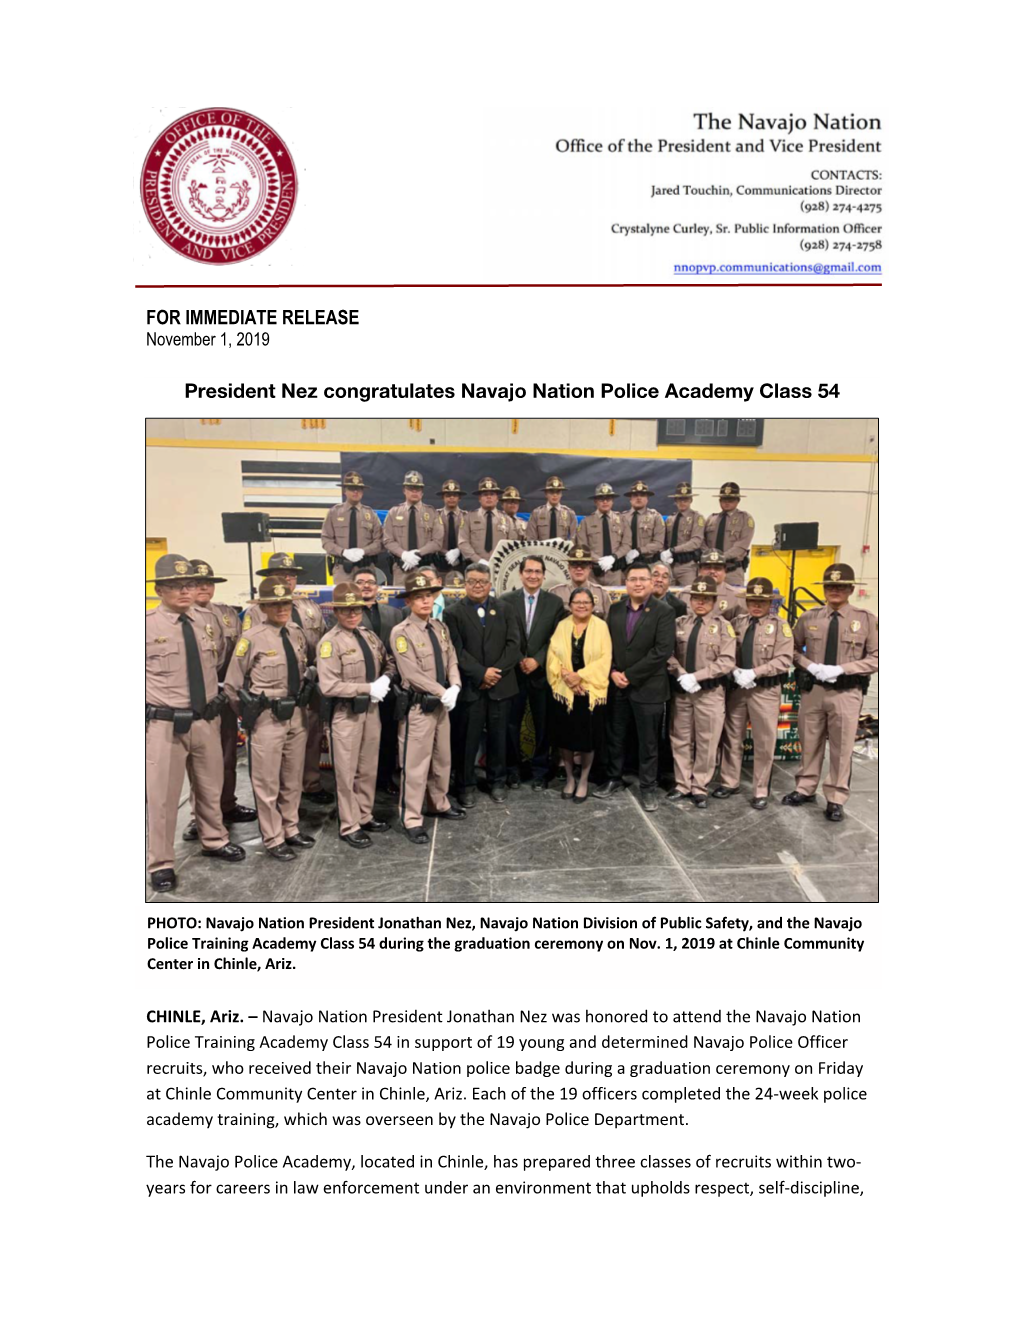 President Nez Congratulates Navajo Nation Police Academy Class 54